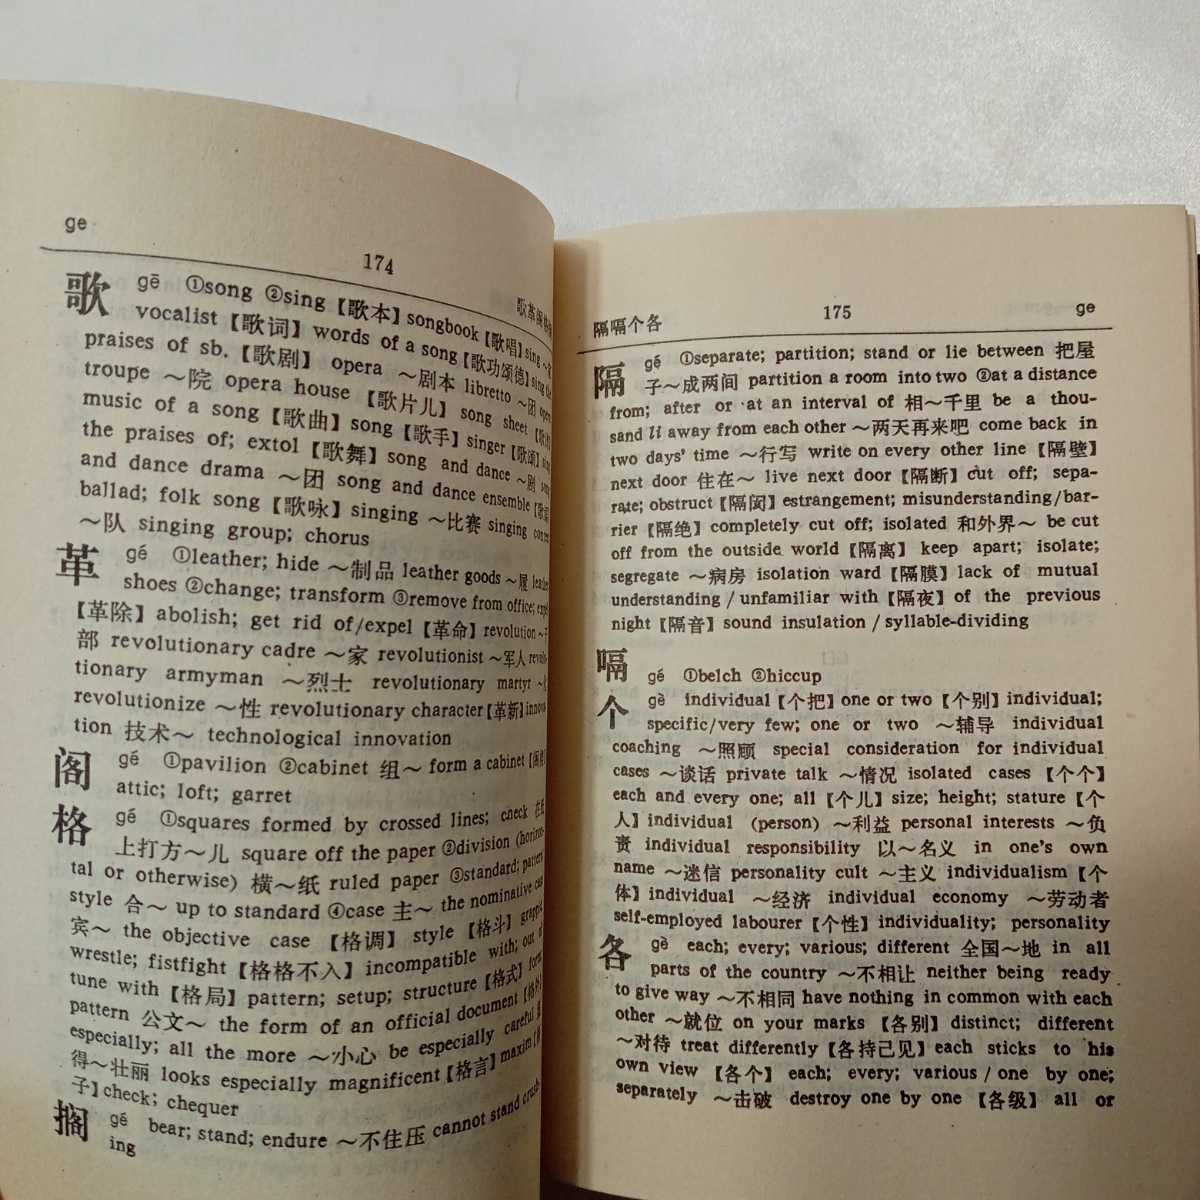 zaa-426![ маленький маленький Британия ..] The * little карман китайский язык - английский язык словарь (THE LITTLE CHINESE-ENGLISH DICTIONARY)(1982/09 продажа )